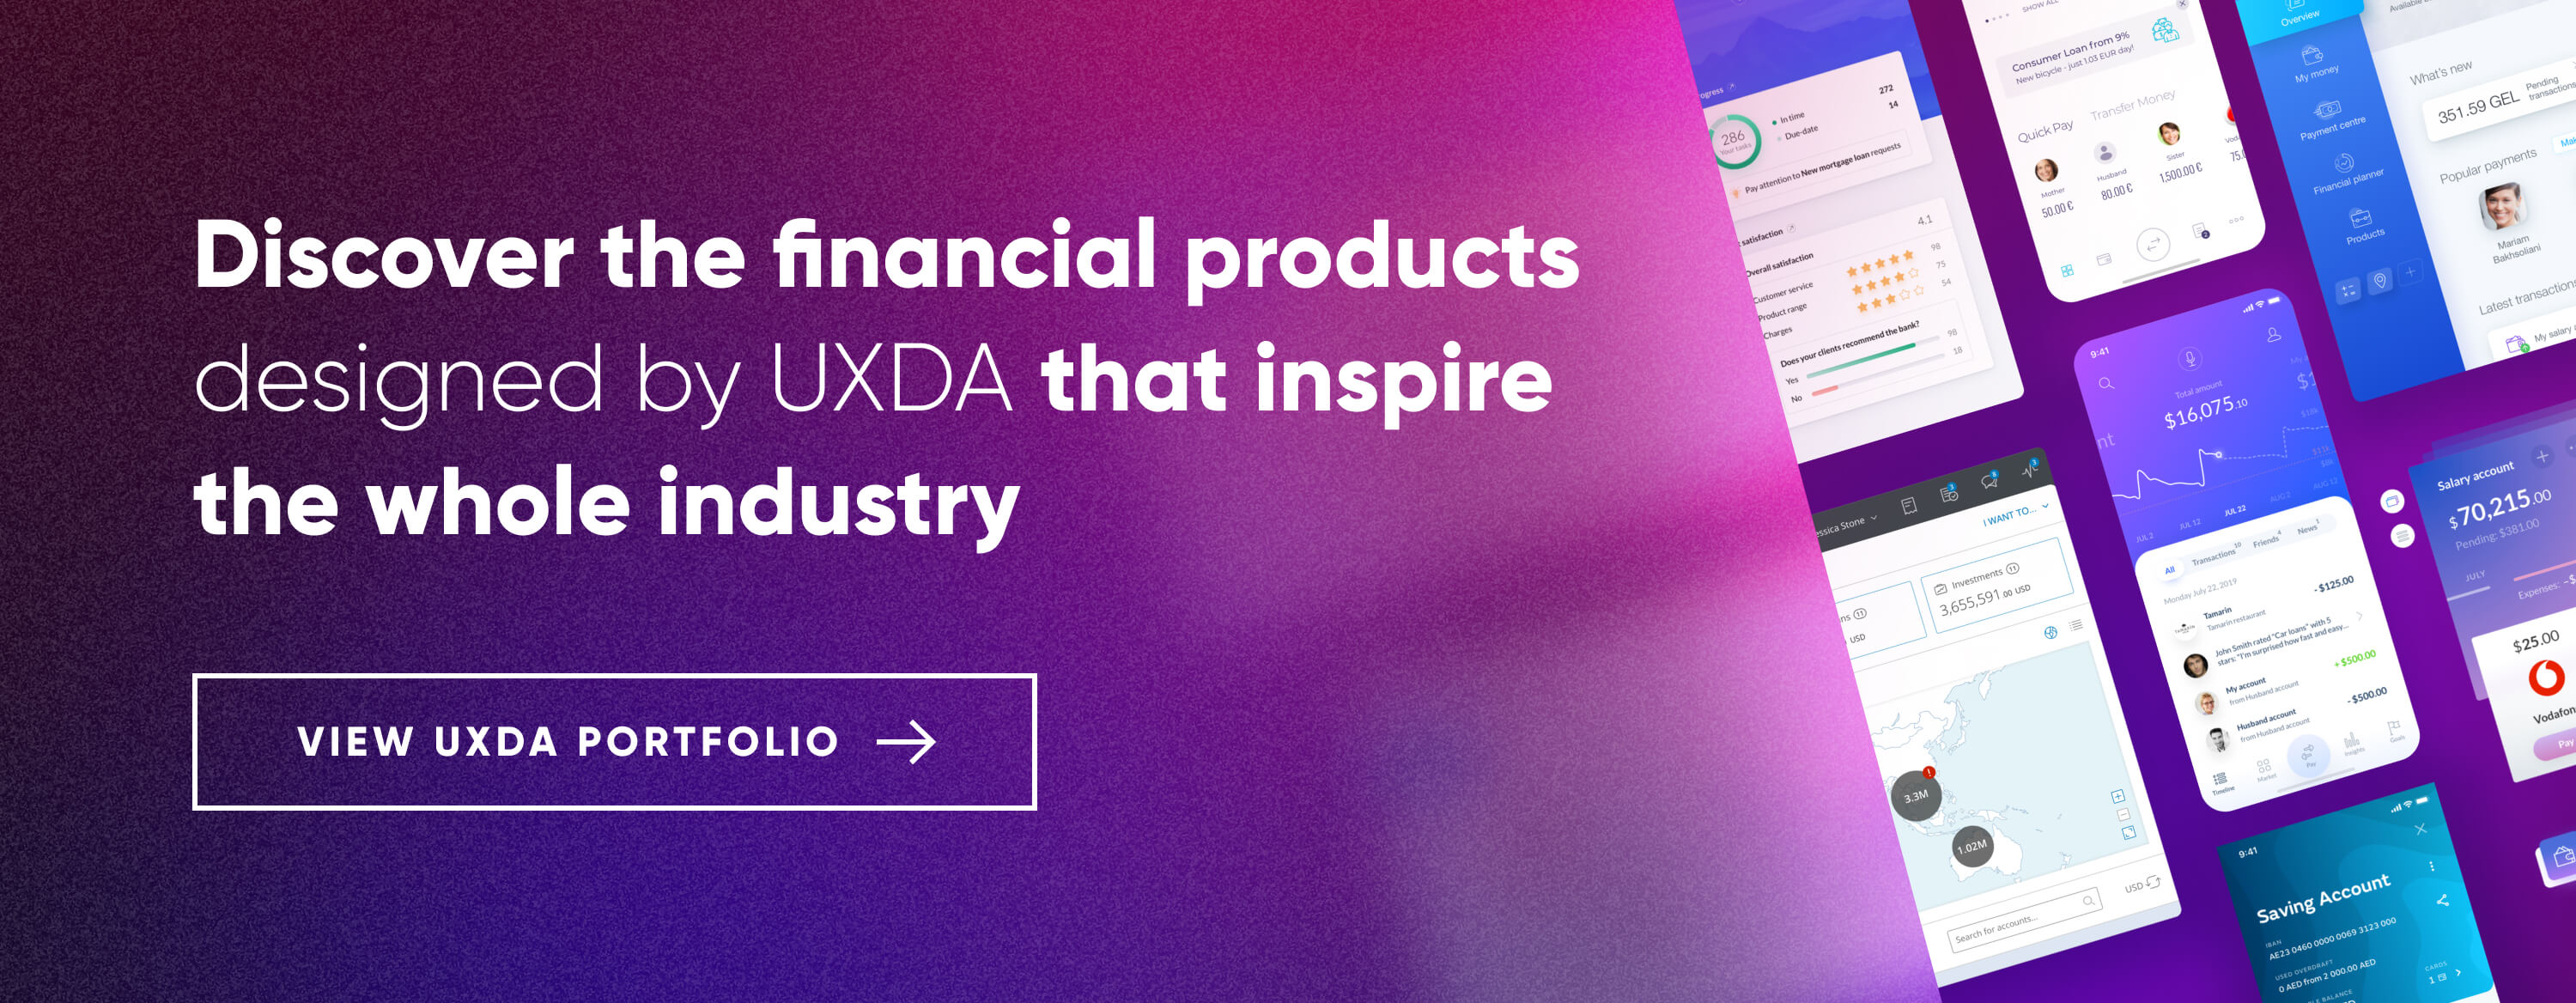 uxda-portfolio-financial-digital-product-inspire-industry-ux-1667398089.jpg